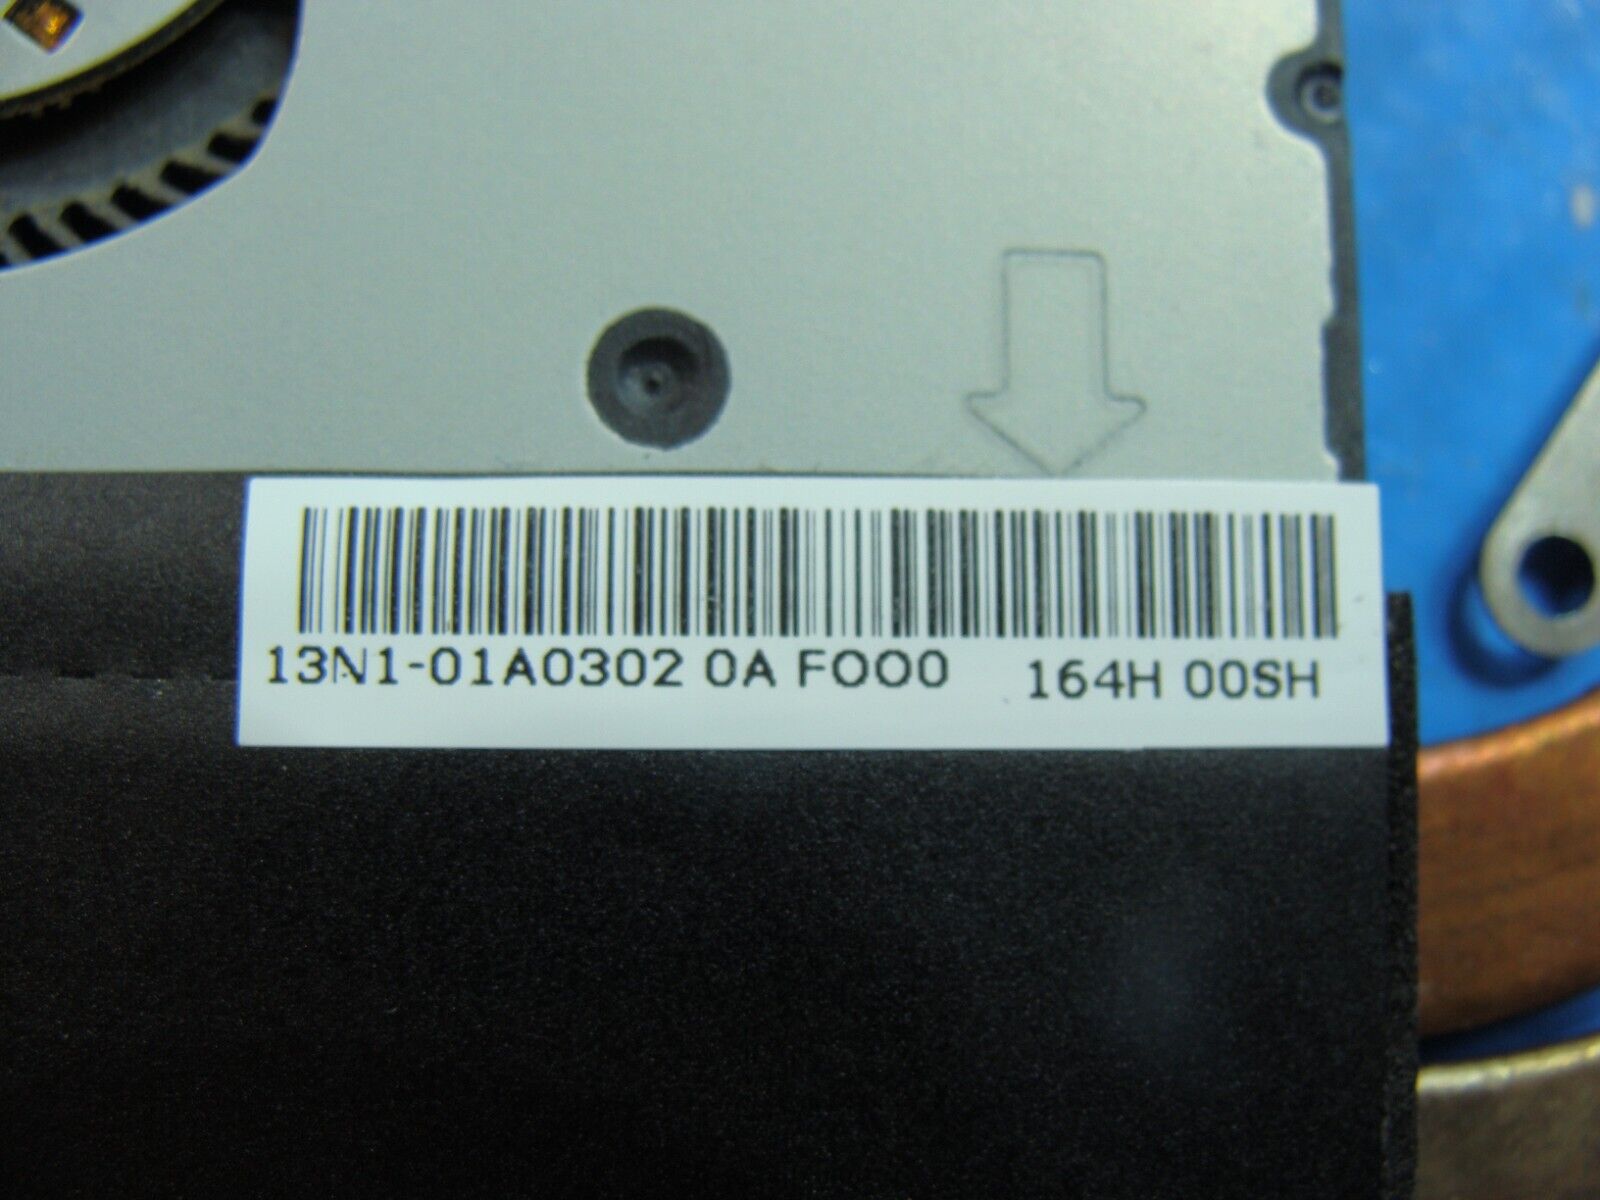 Acer Aspire 15.6” R5-571TG-78G6 Genuine CPU Cooling Fans w/Heatsink 13N1-01A0302